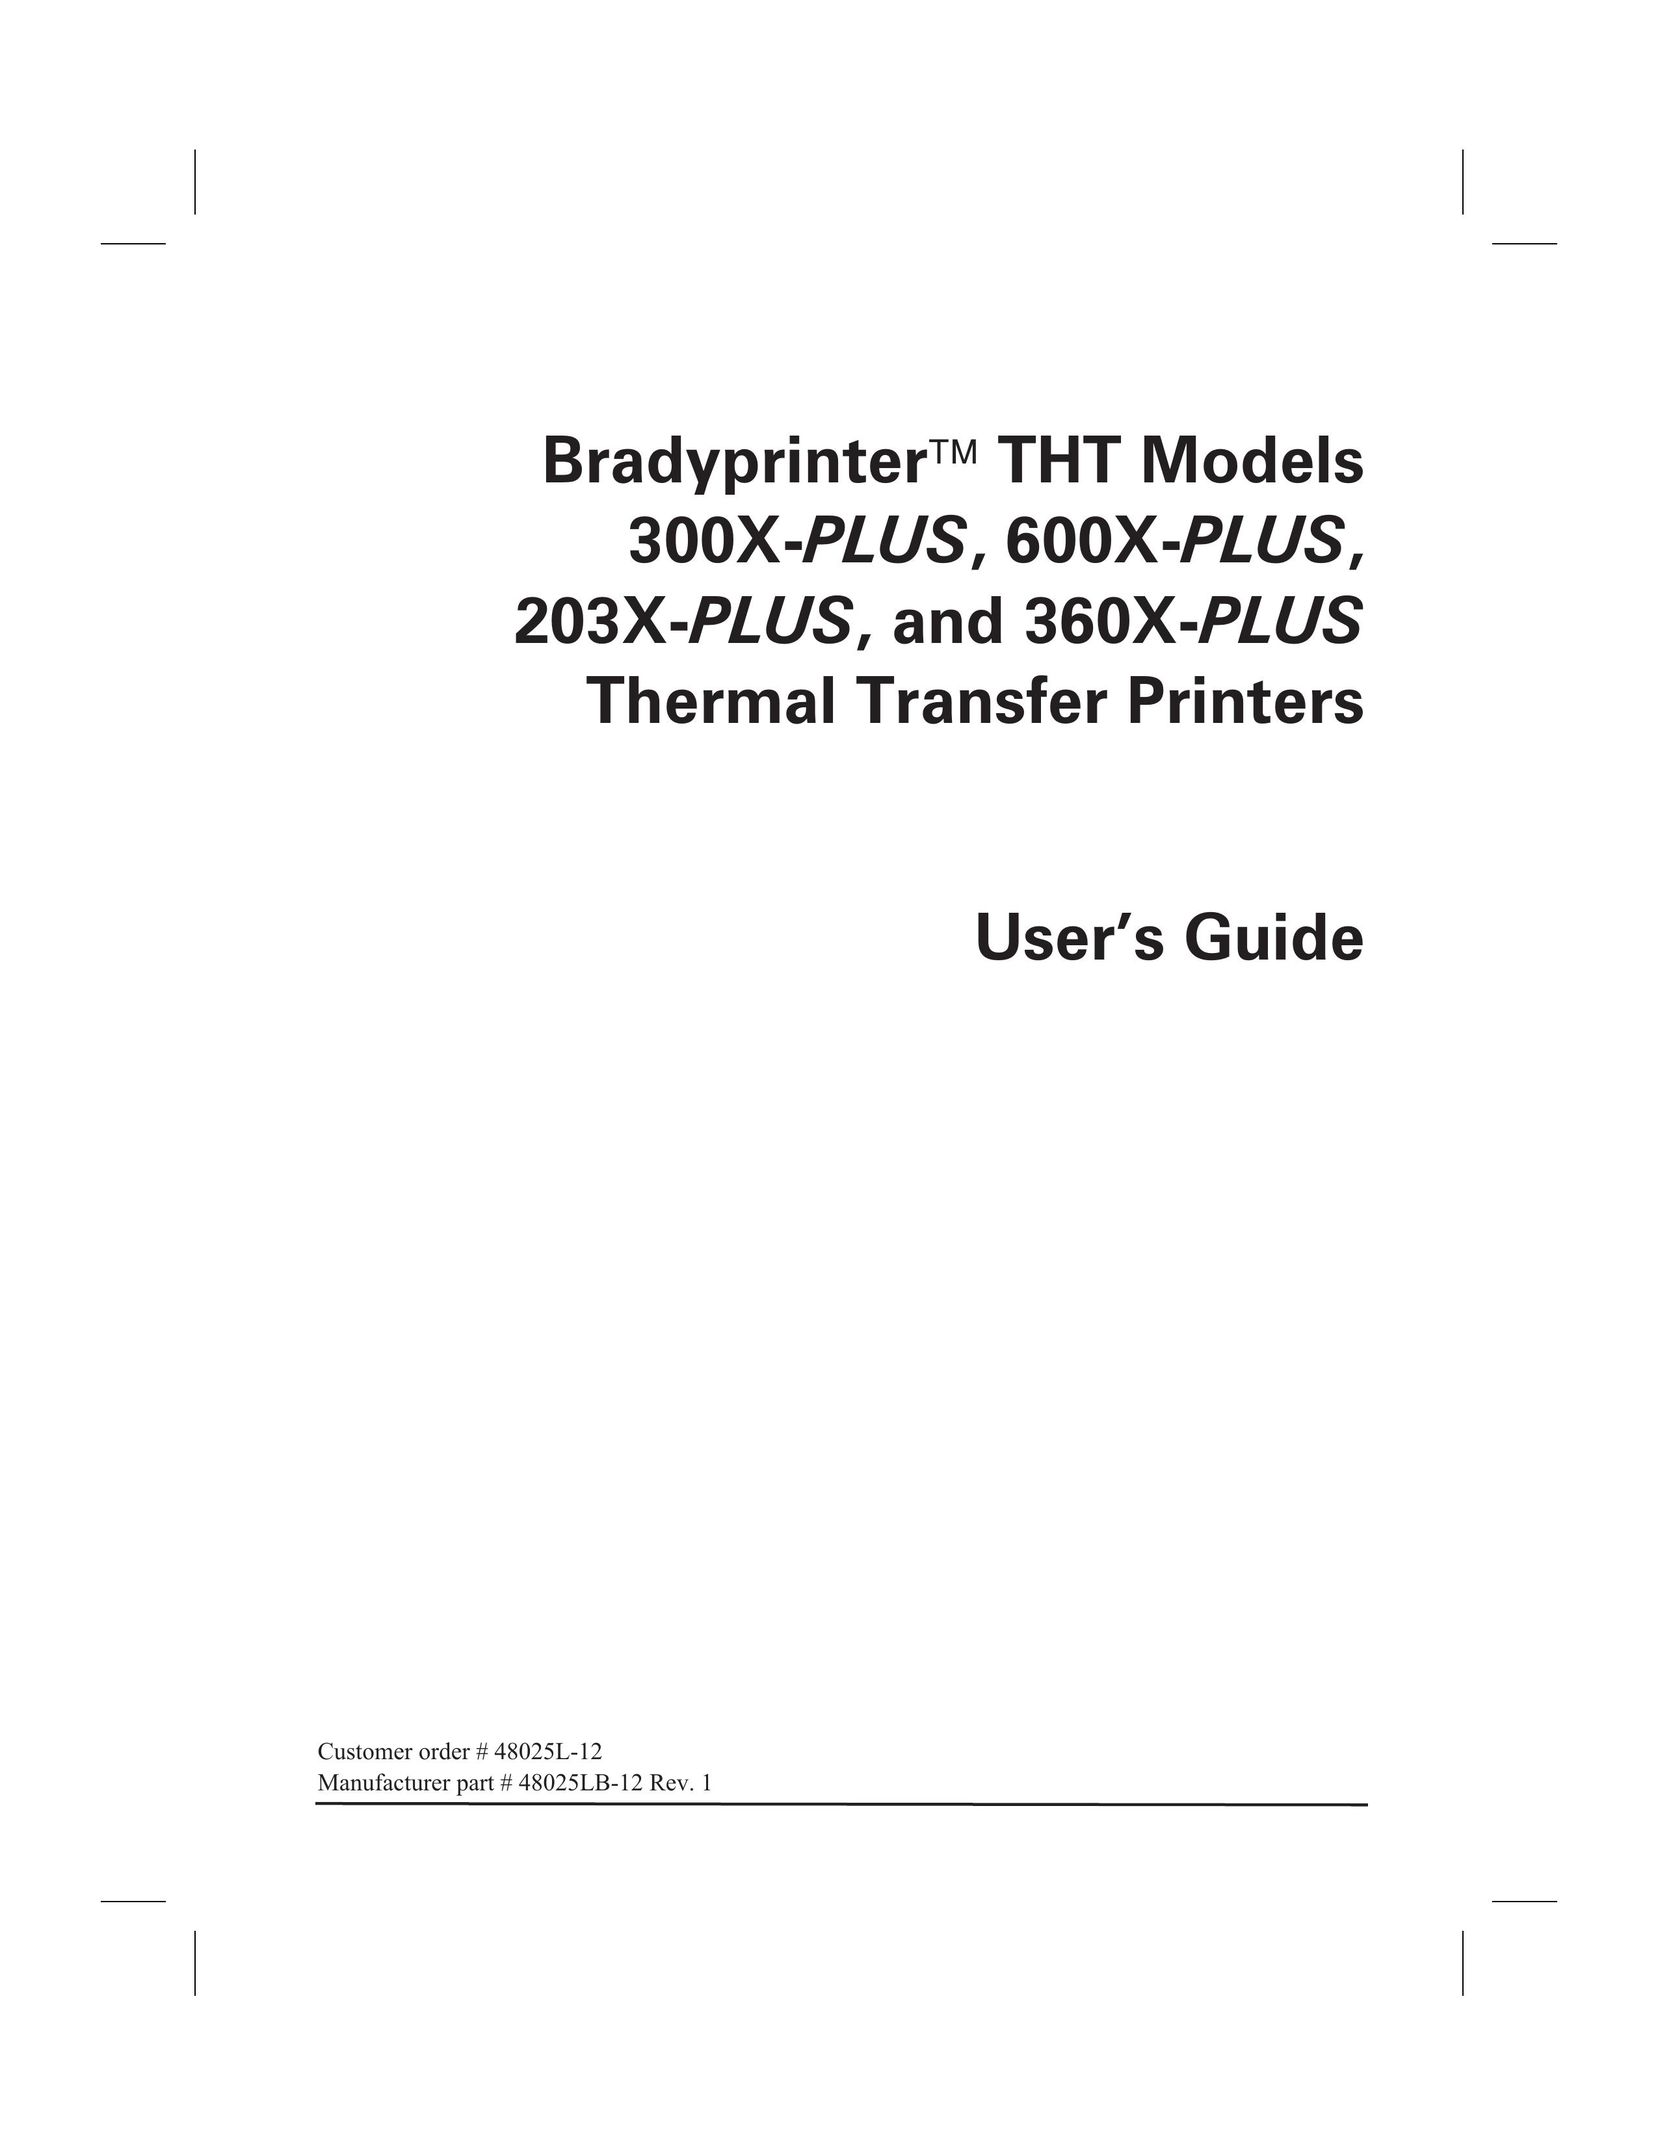 Brady and 360X-PLUS Printer User Manual